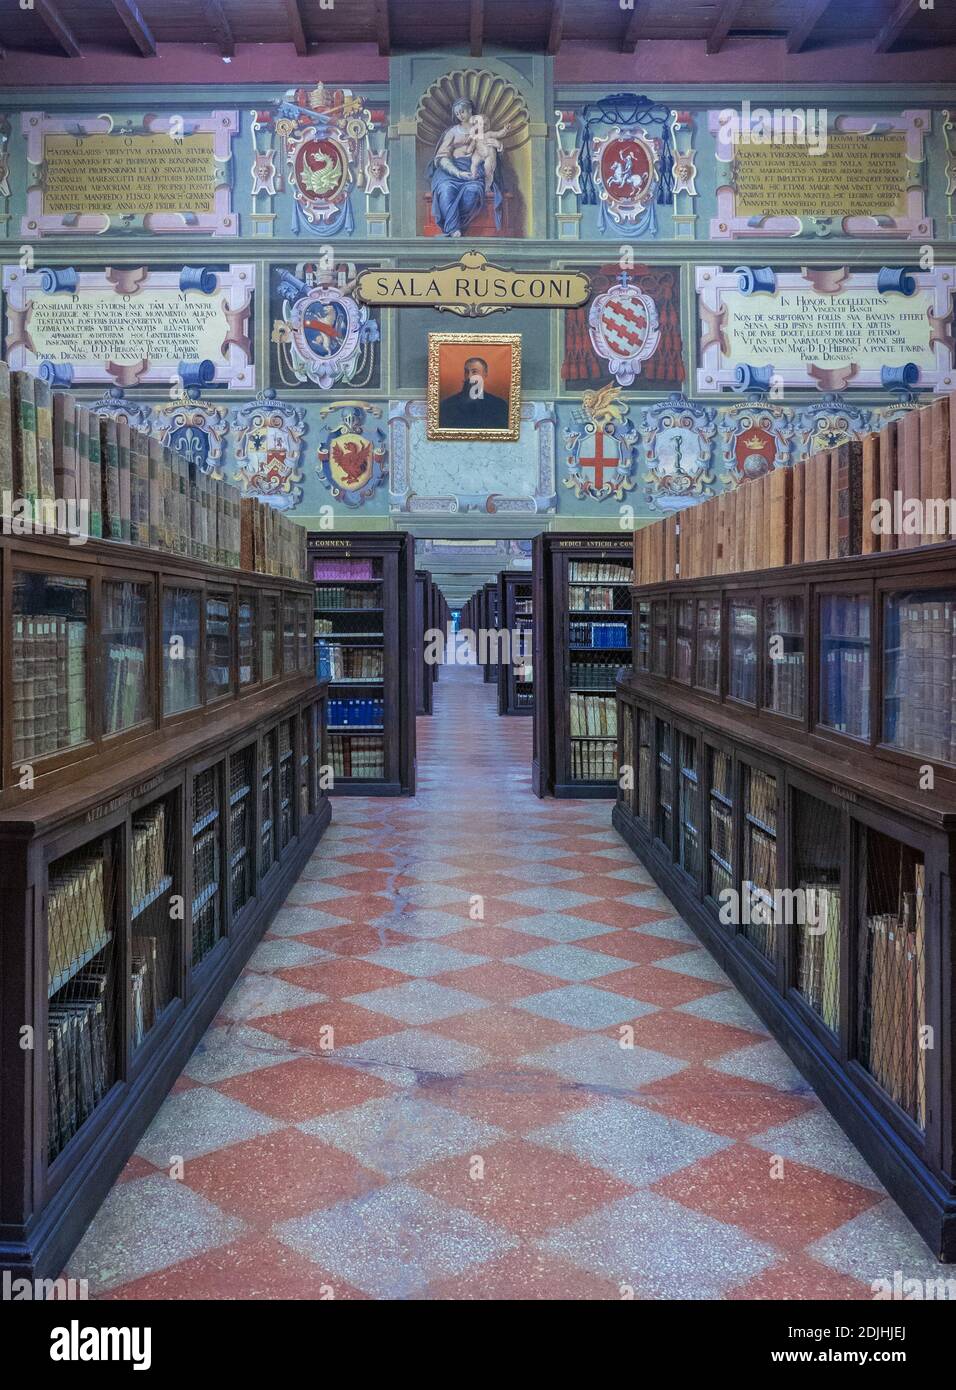 Sala Rusconi in the stunning Bologna Municipal Library in the Archiginnasio  building,Italy Stock Photo - Alamy